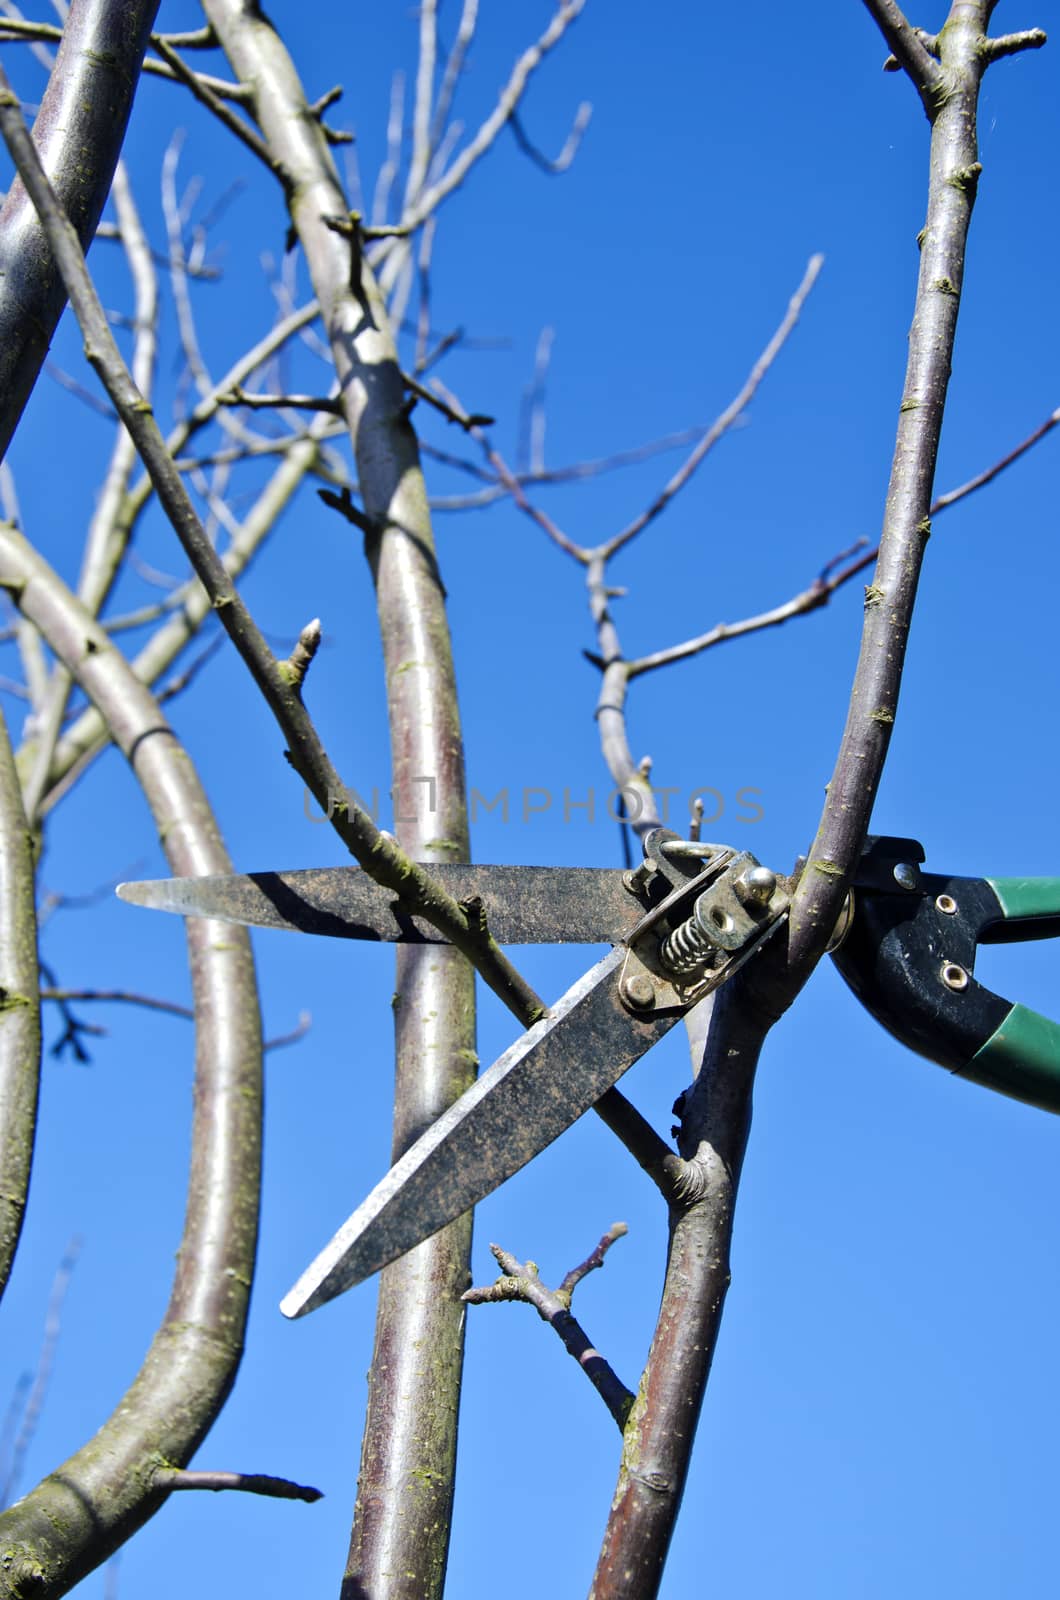 Pruning shears hanged in apple tree in spring garden